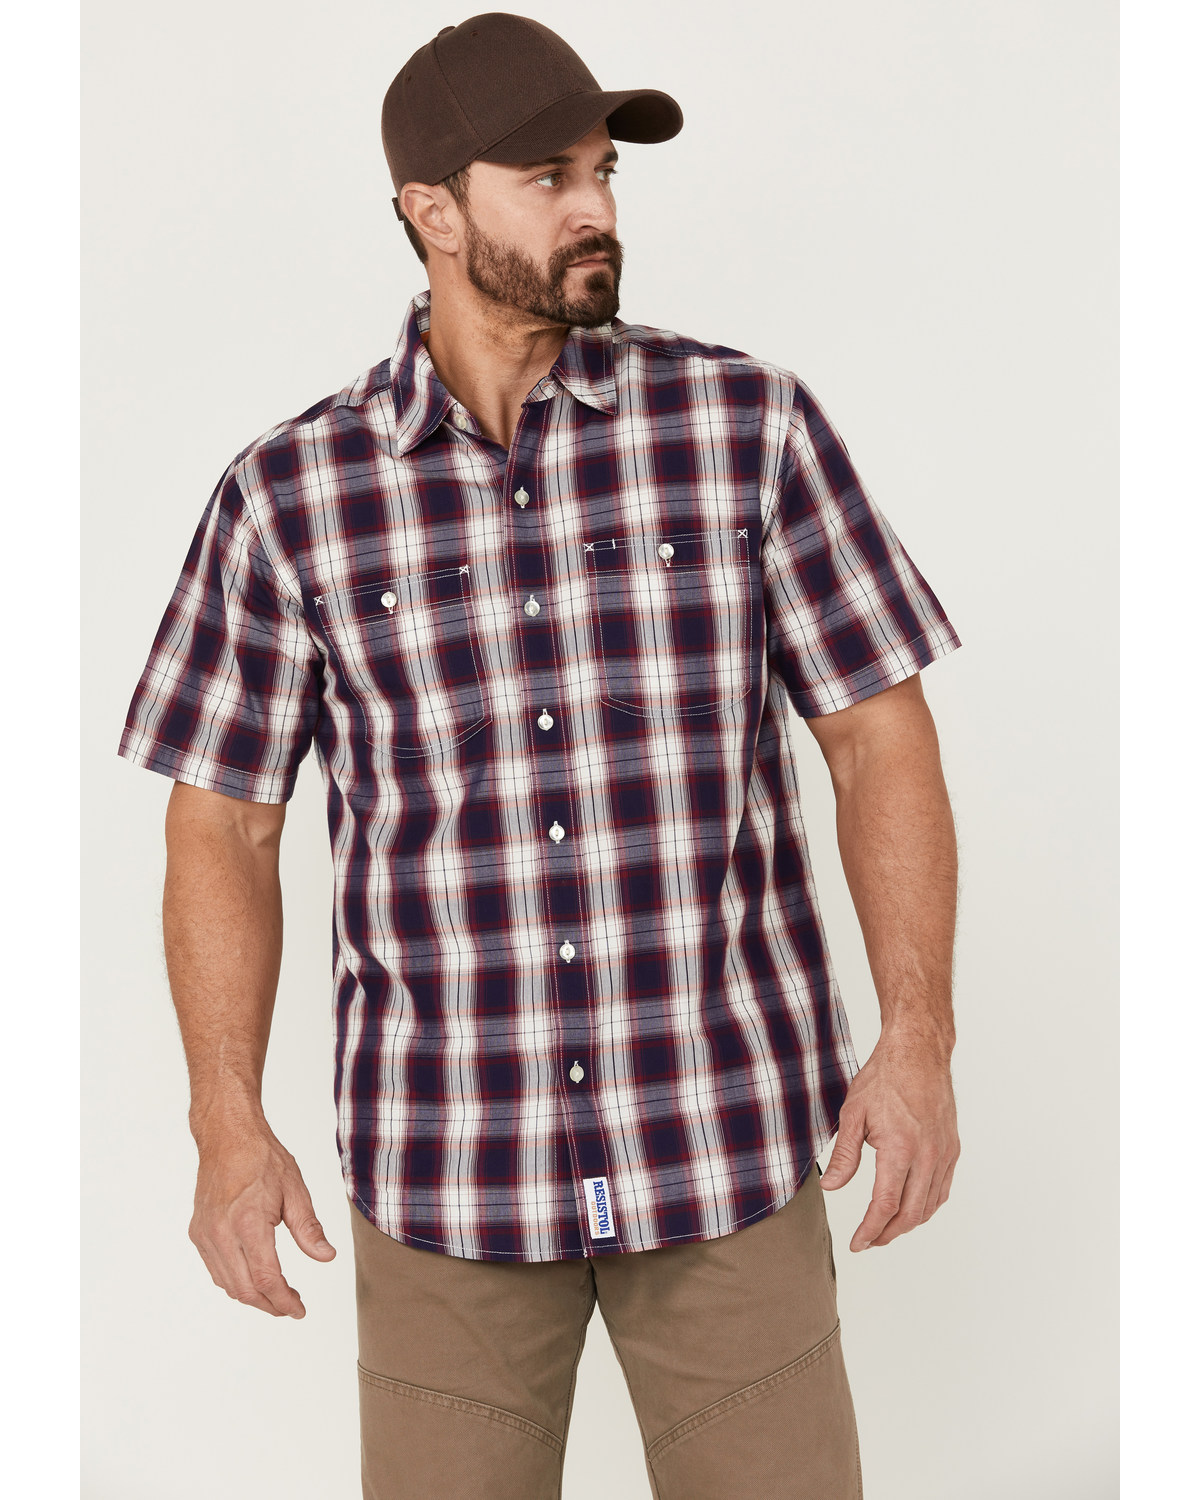 Resistol Men's Atlantis Ombre Plaid Print Short Sleeve Button Down Western Shirt